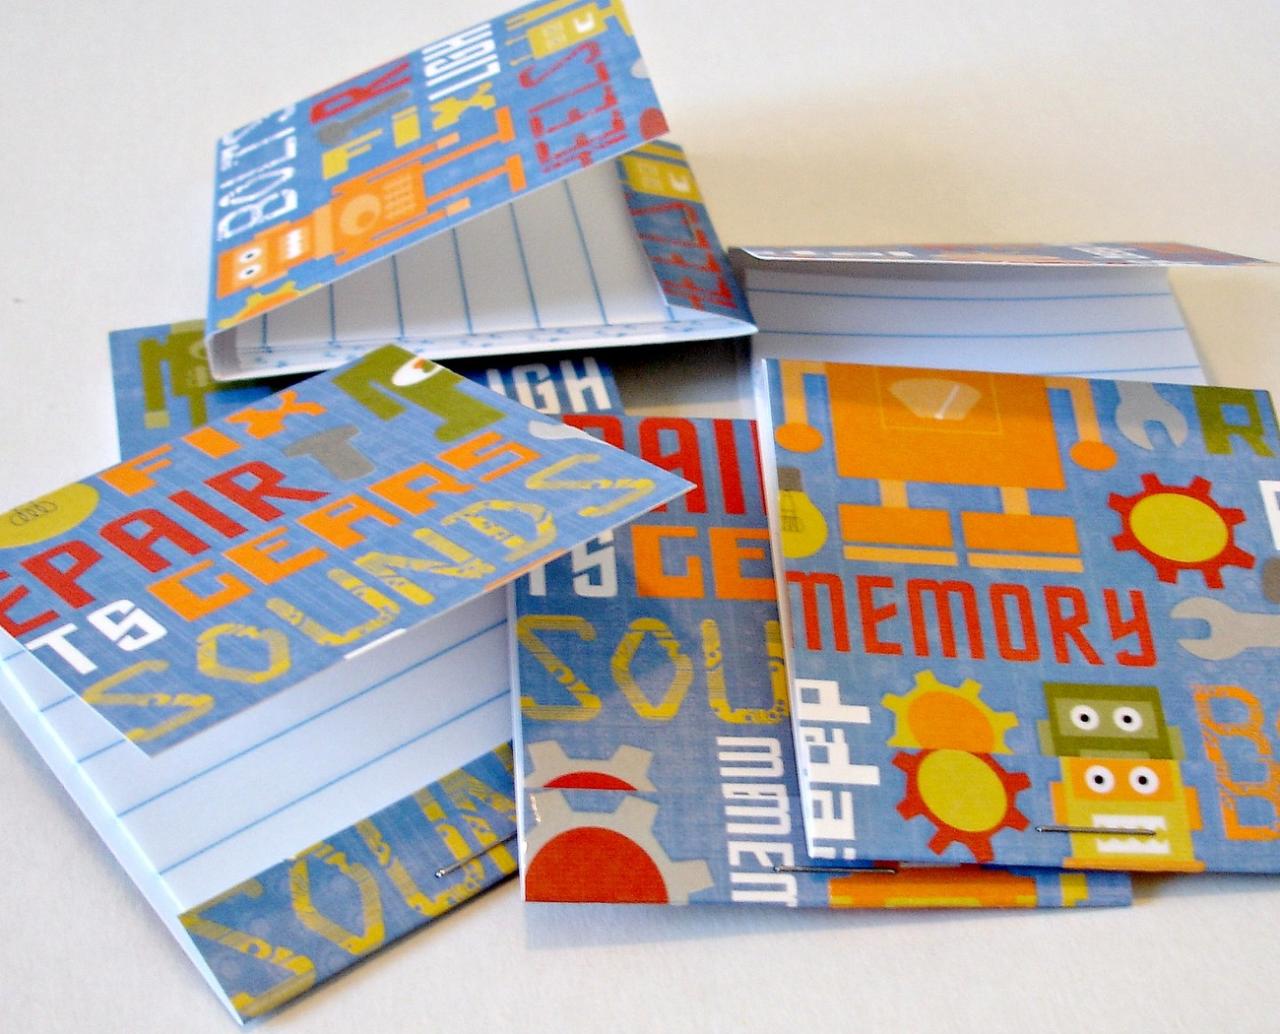 Boys Love Robot Mini Matchbook-style Note Pads Jotter Set Of 6 Handmade Matchbook Note Pads